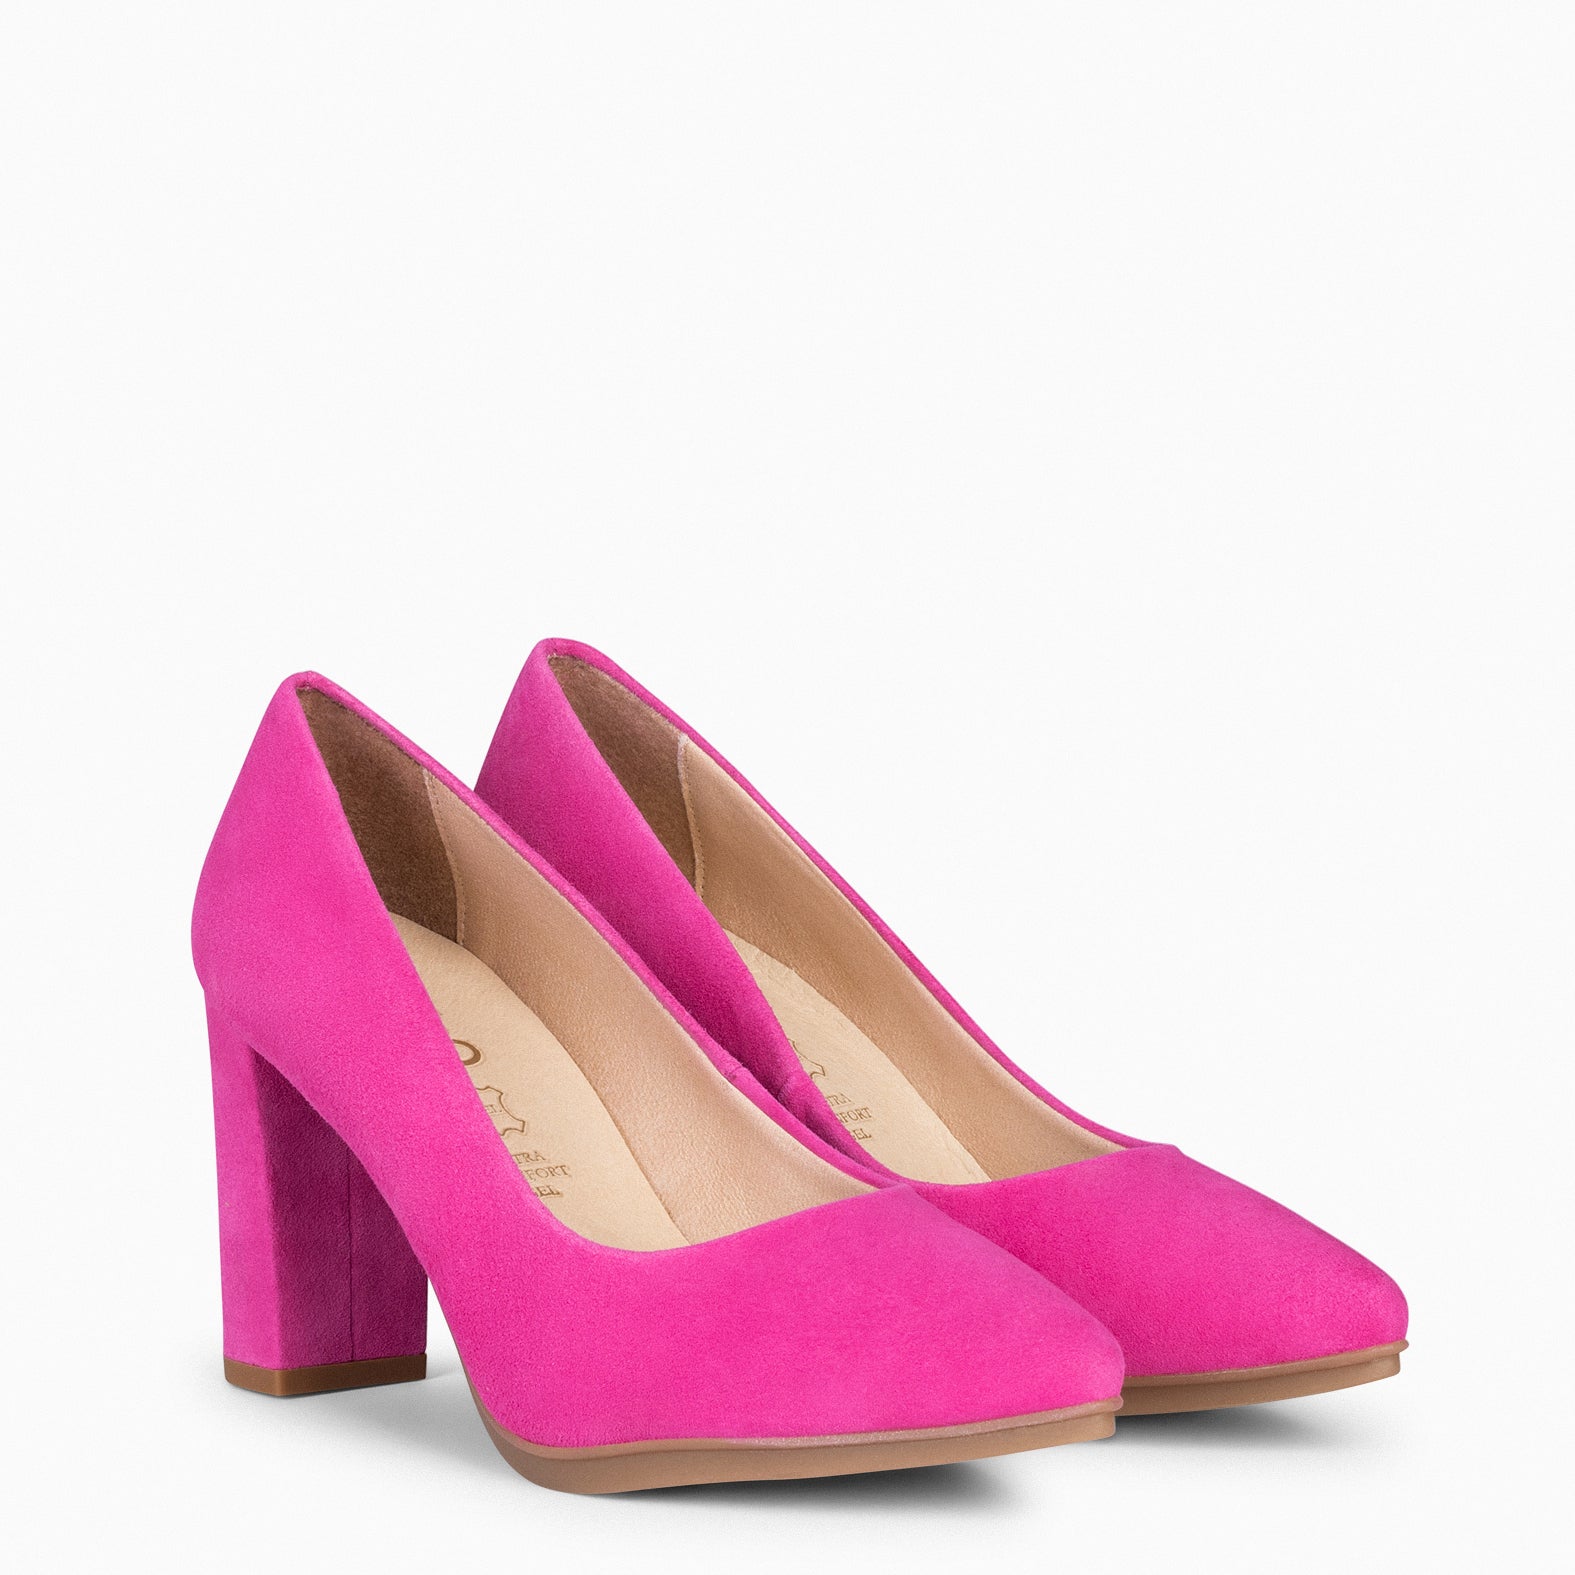 URBAN – FUCHSIA Suede high-heeled shoes 